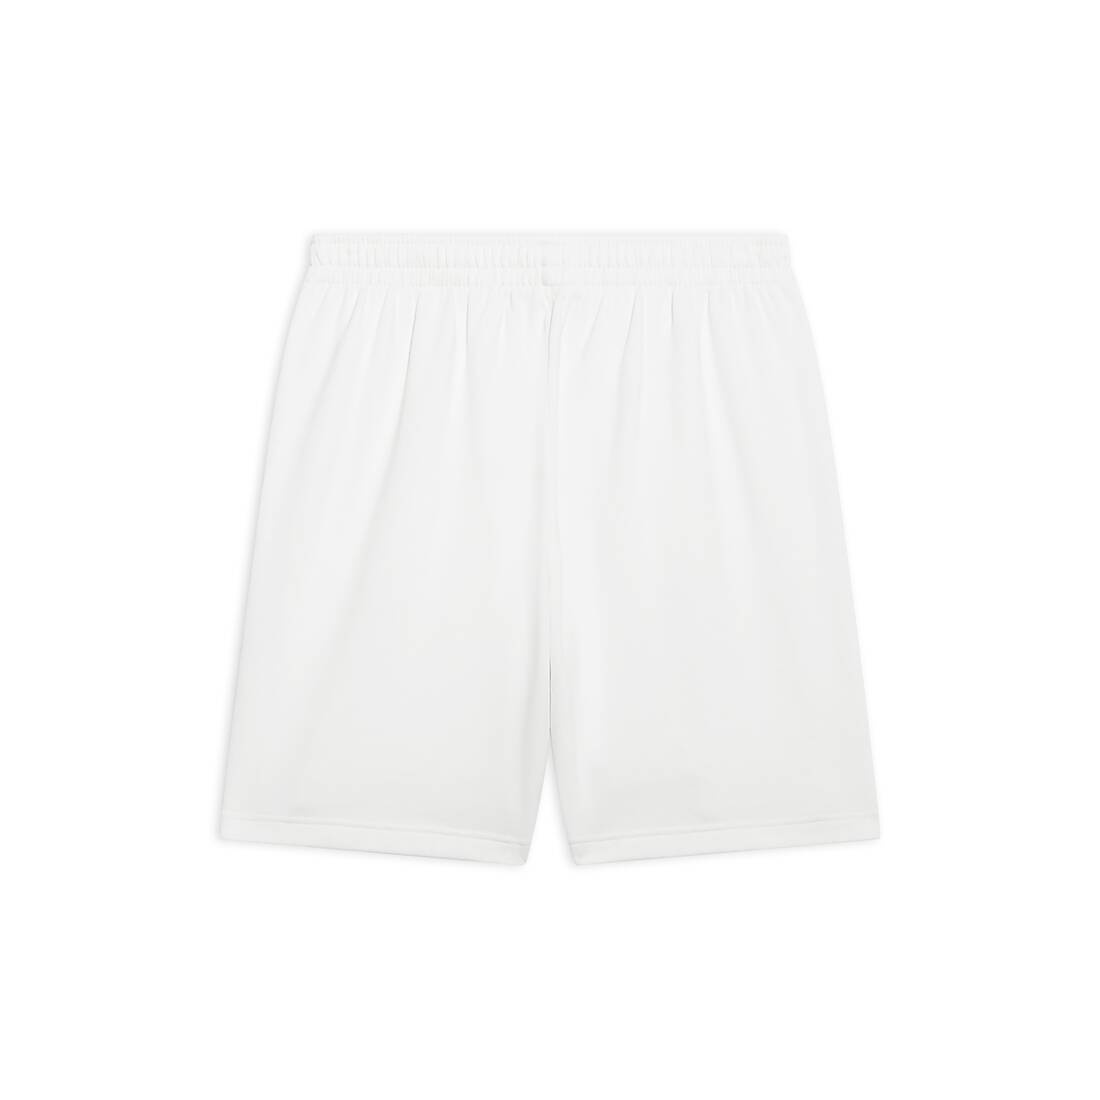 Men's Political Campaign Sweat Shorts in White - 5